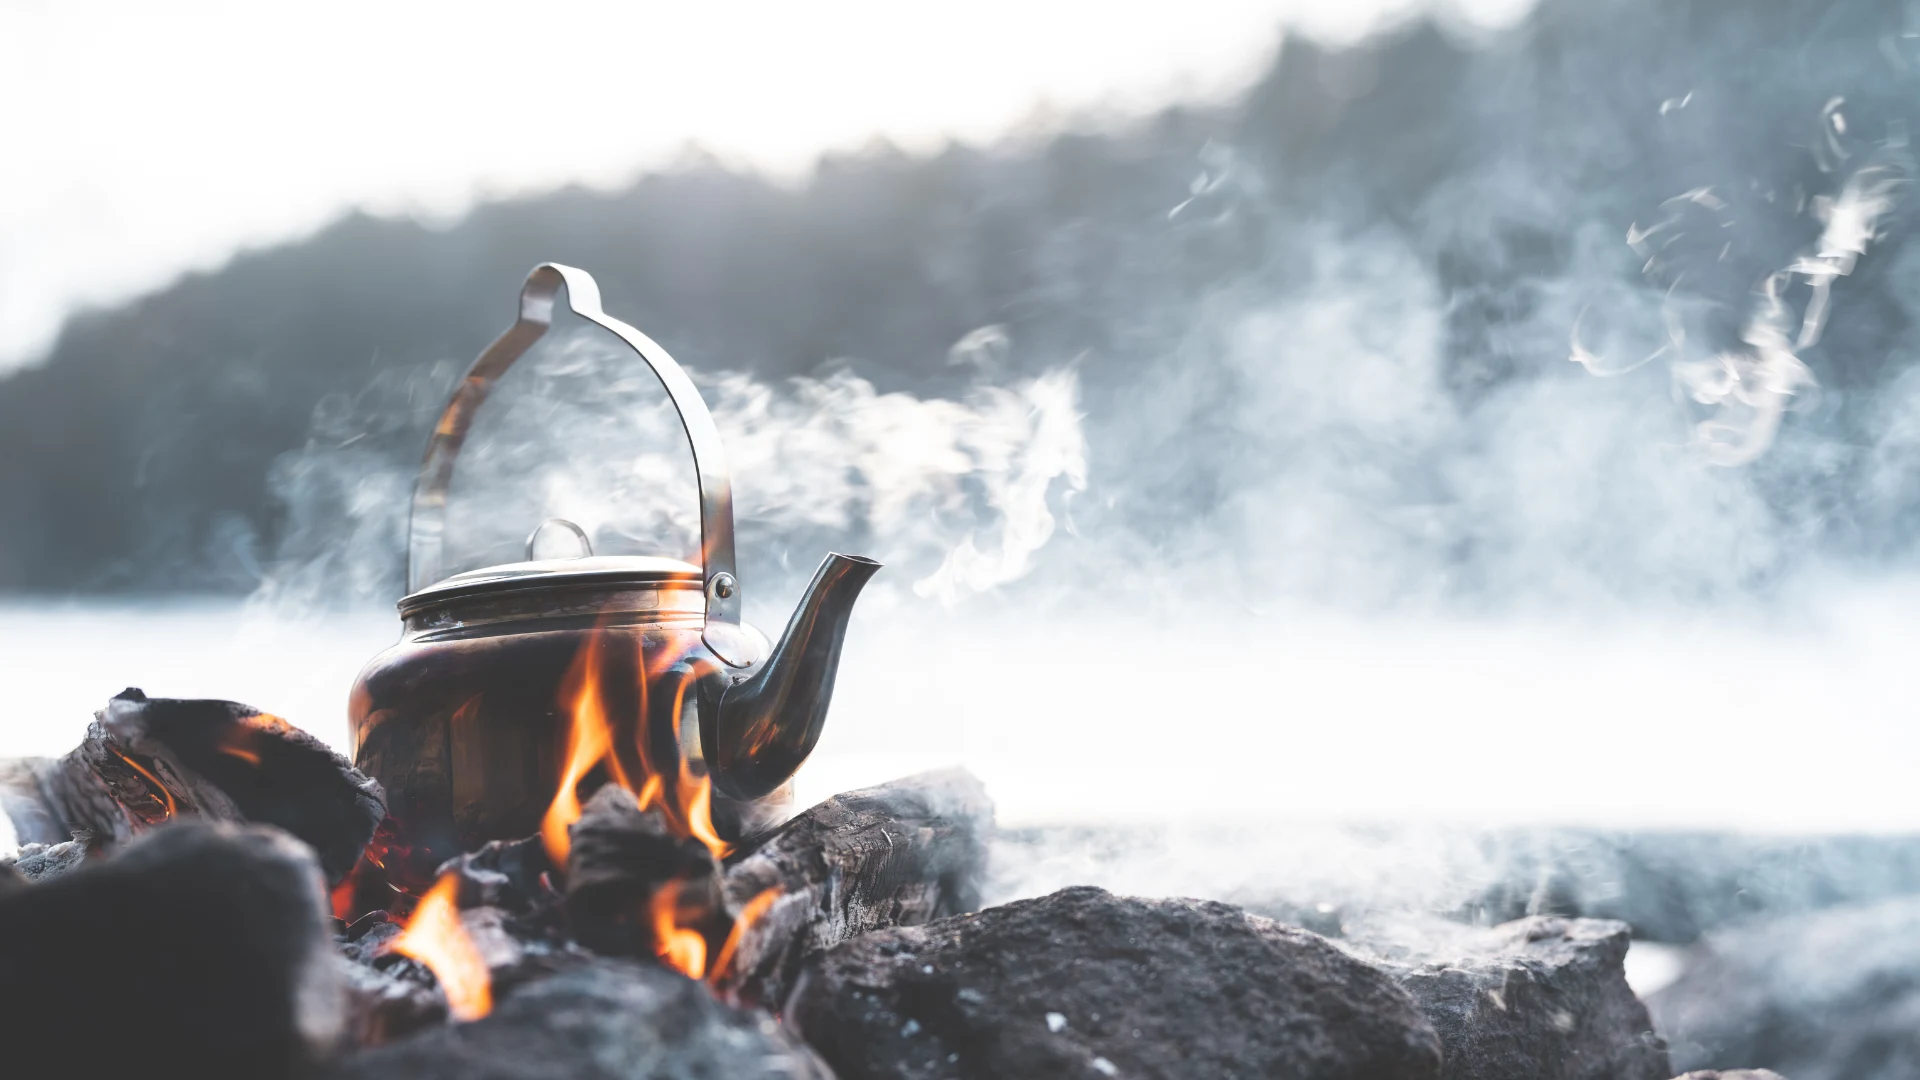 Tea pot making campfire coffee